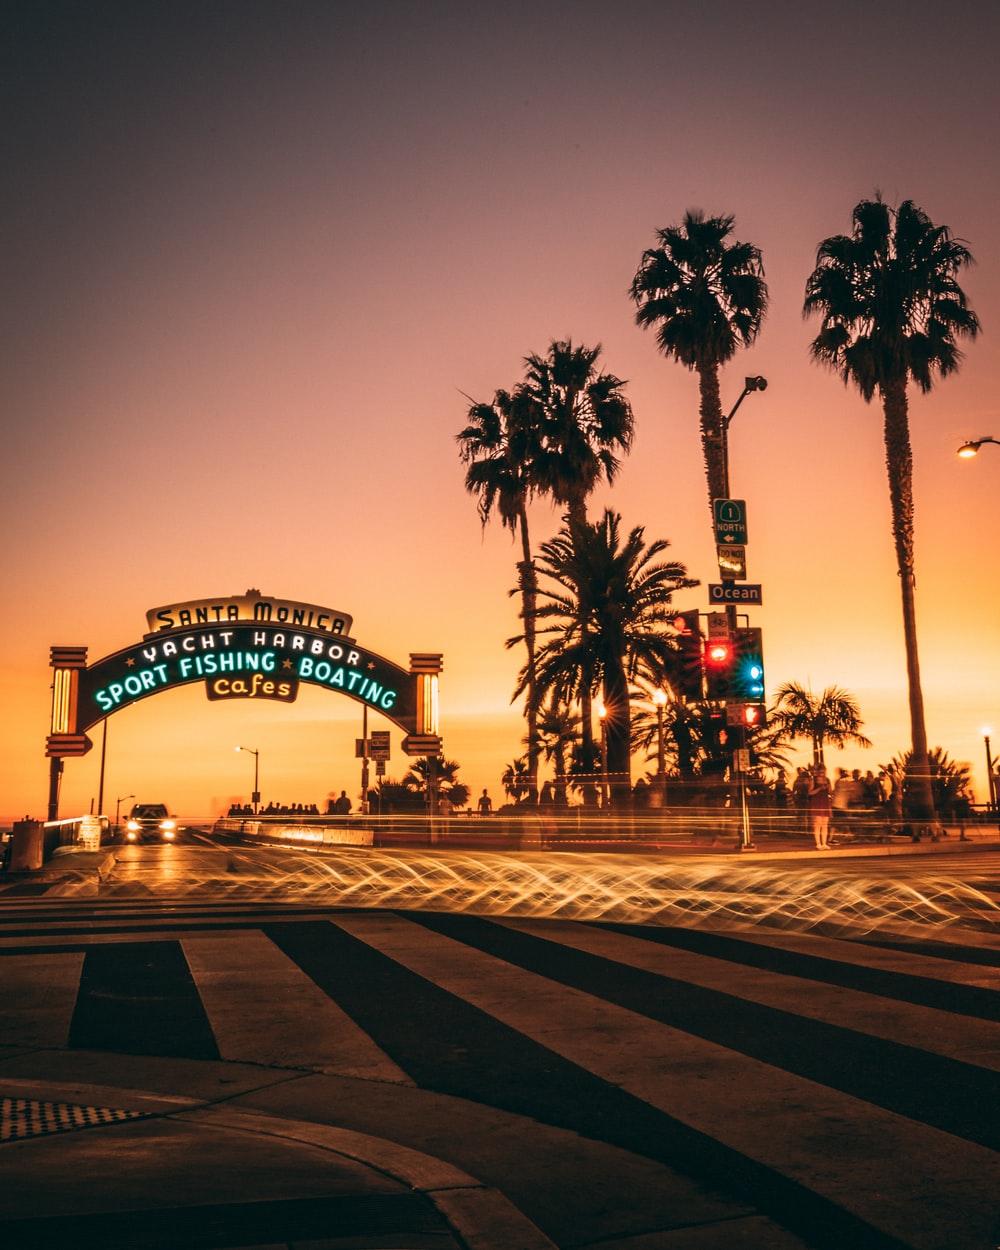 Santa Monica at Sunset. HD photo